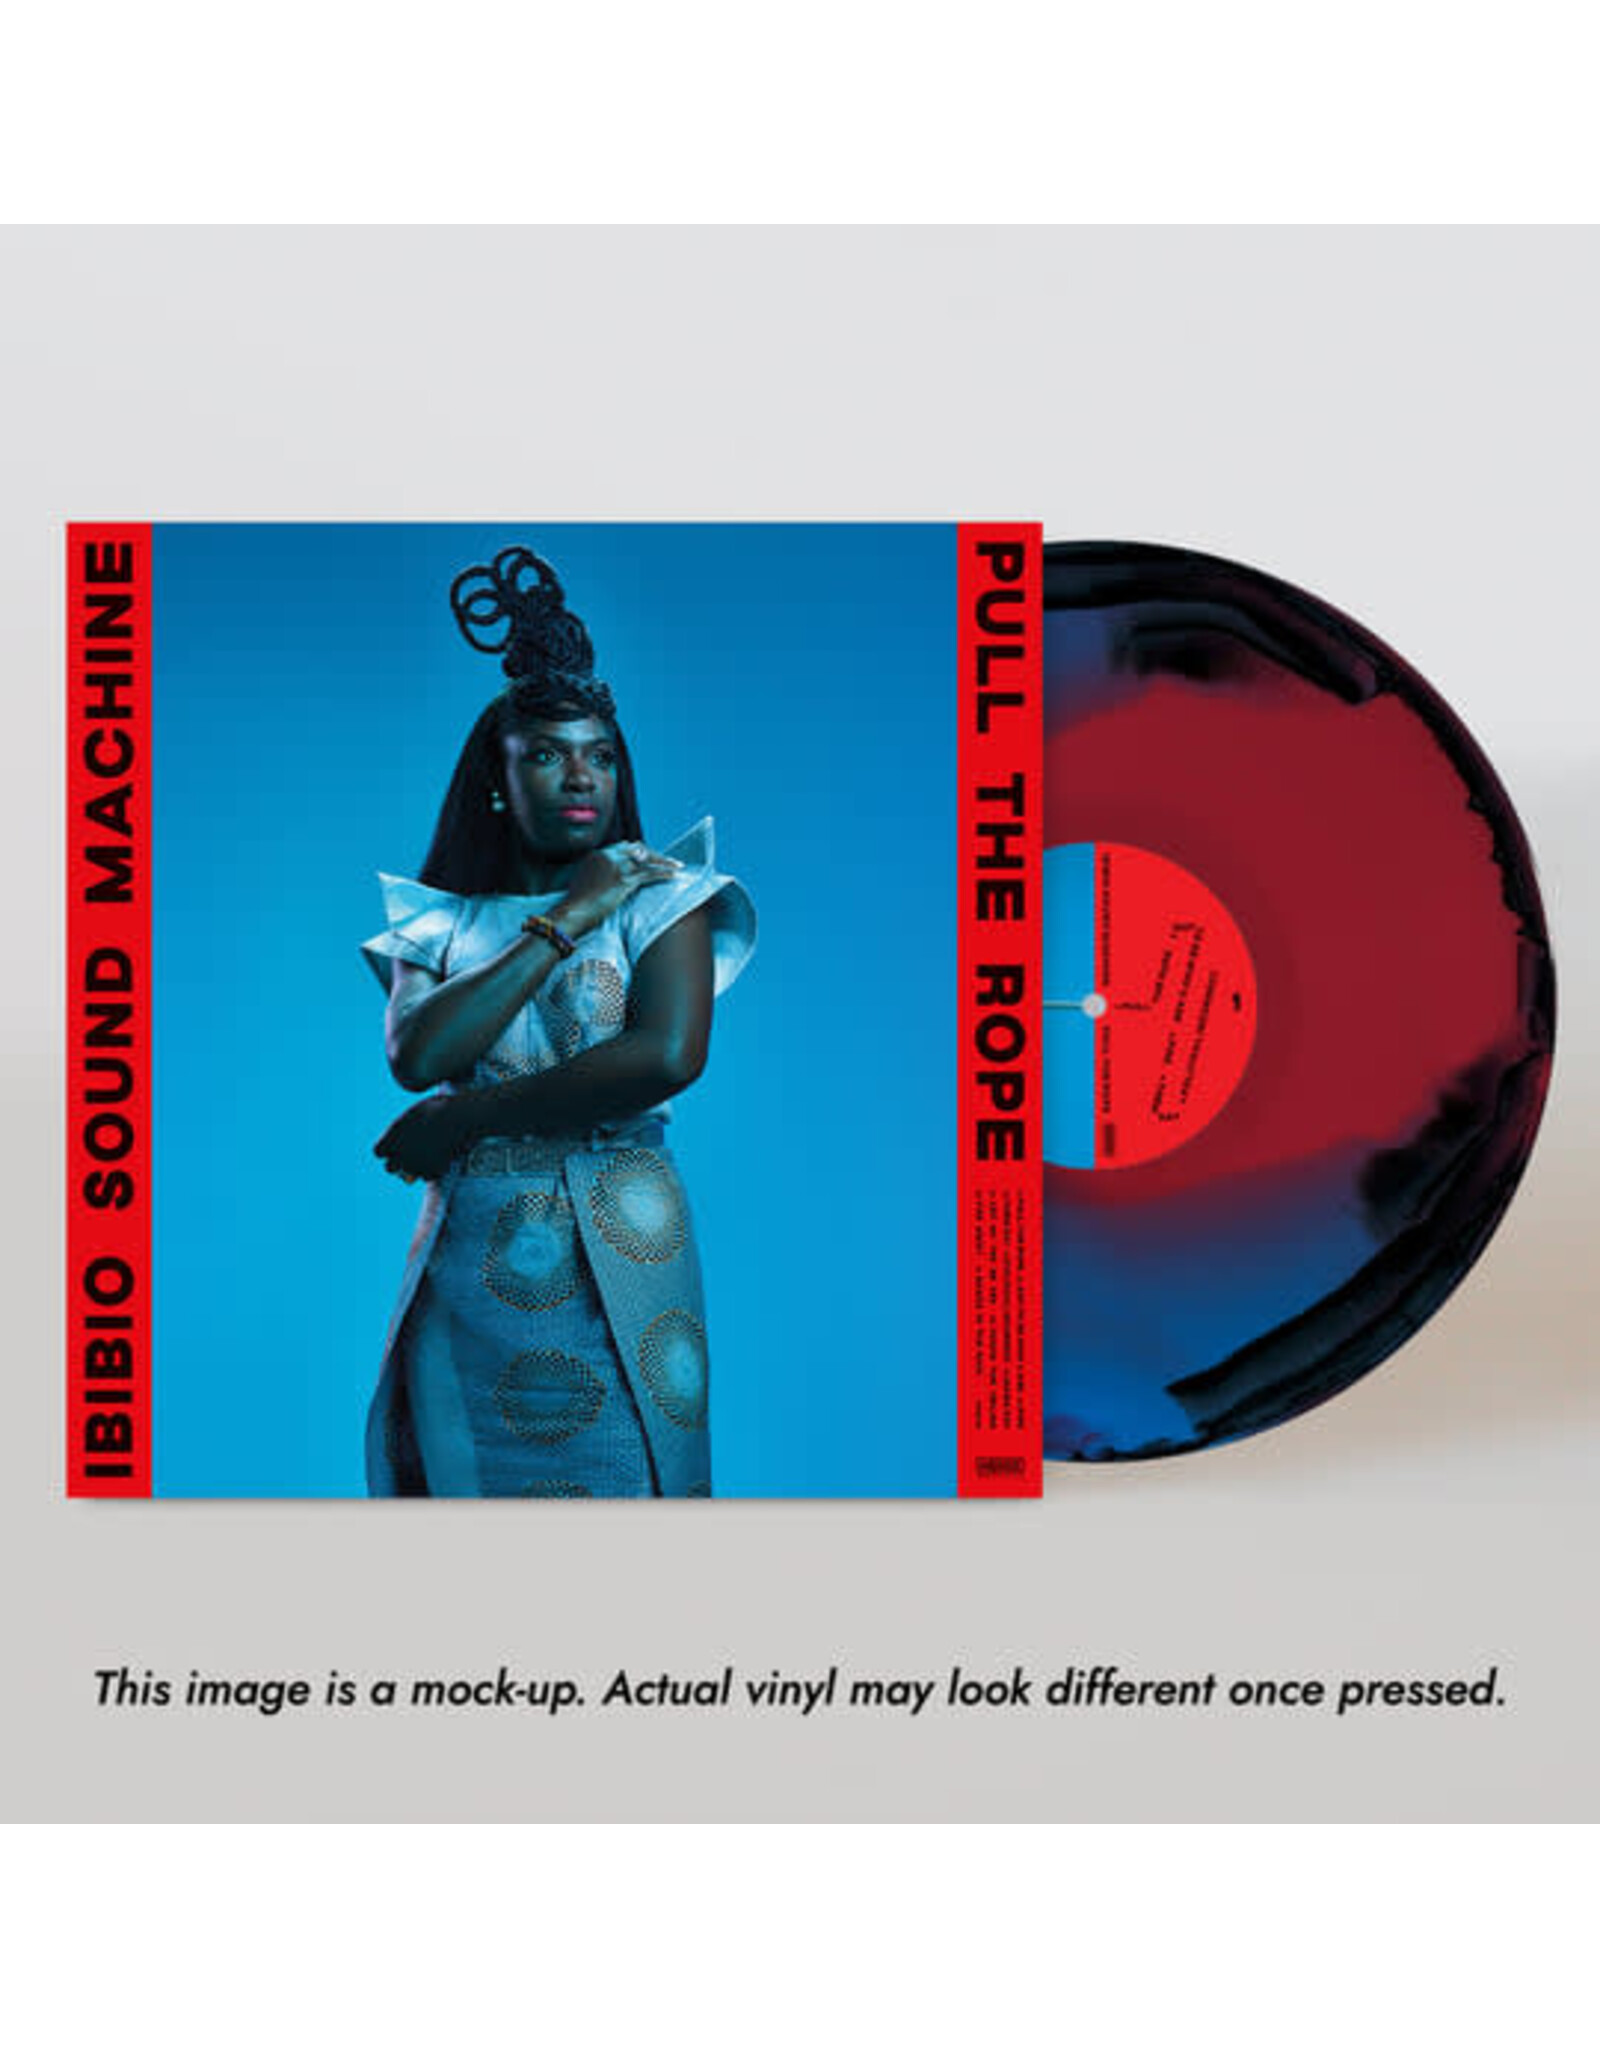 Ibibio Sound Machine - Pull the Rope (Exclusive Colour Vinyl)